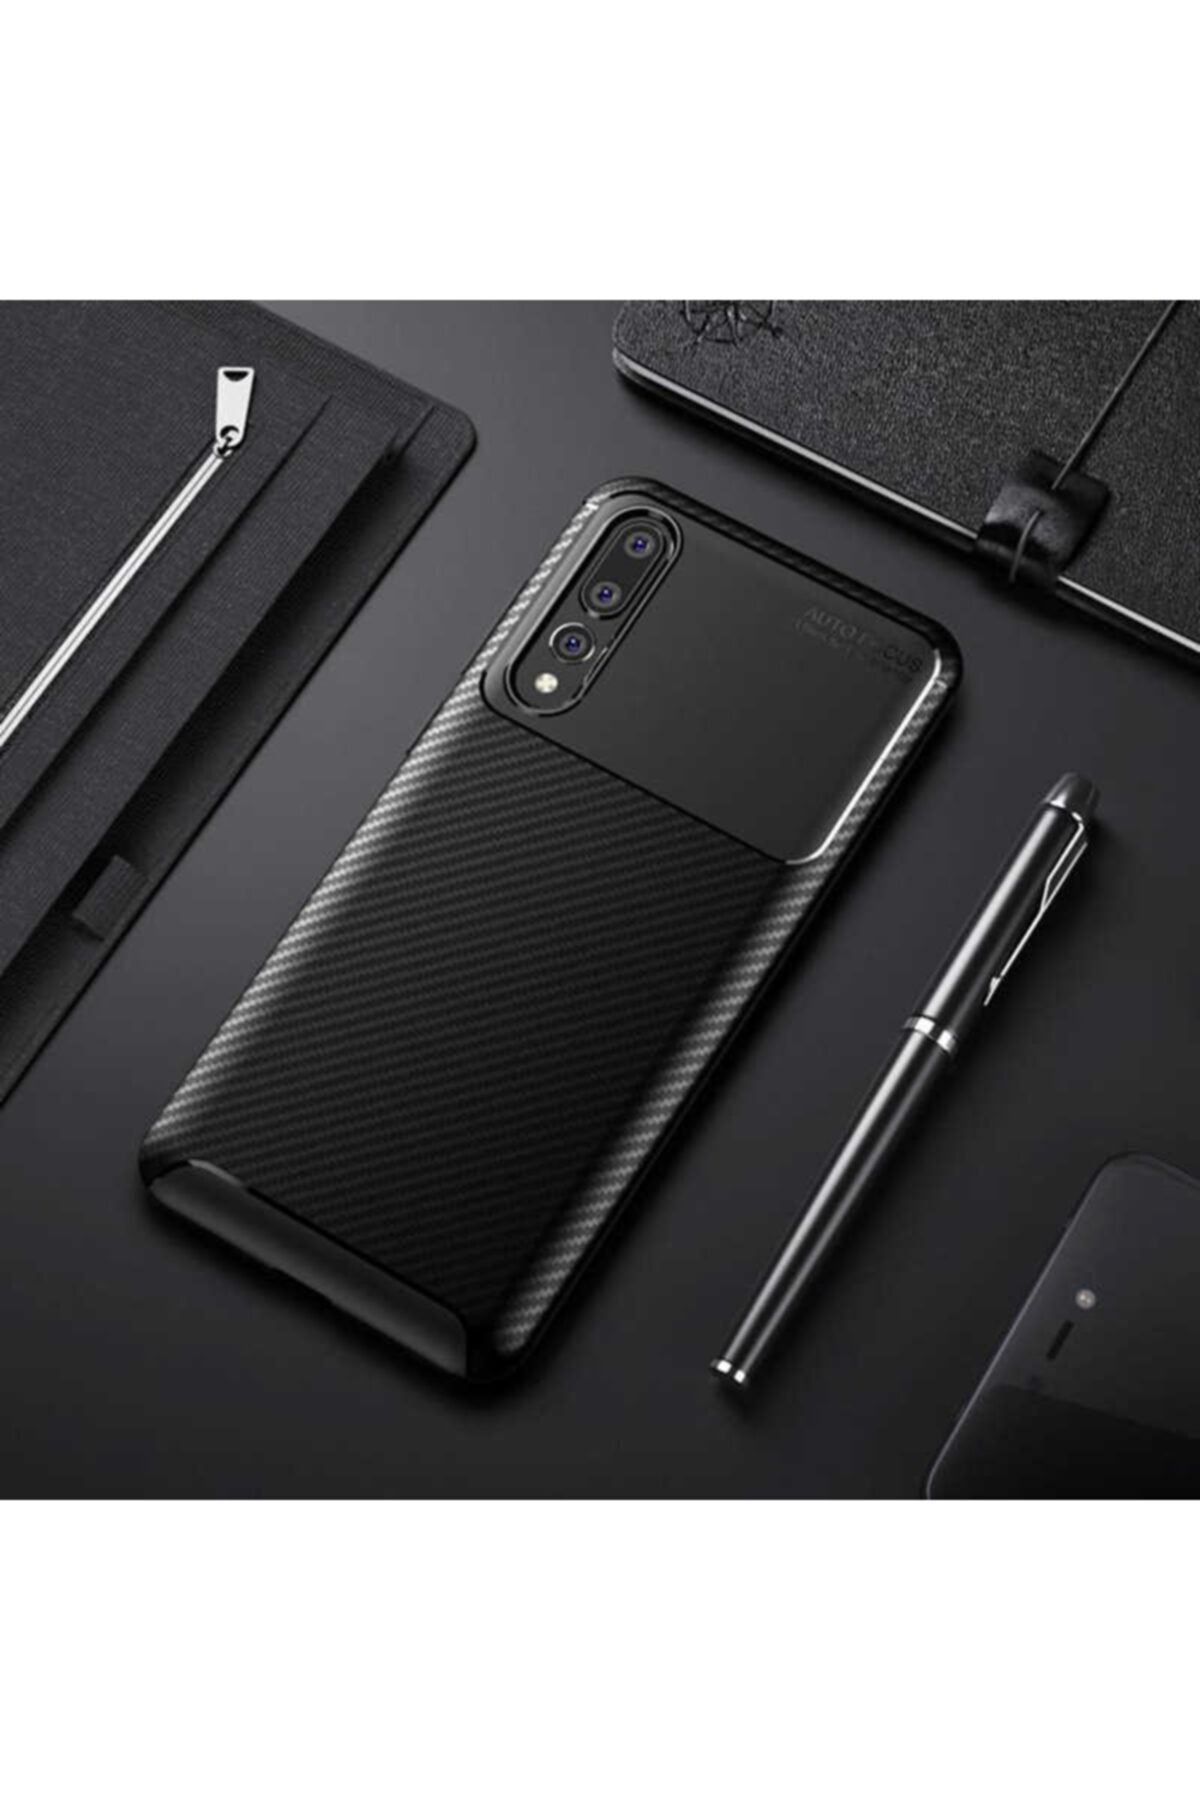 Nezih Case Huawei P20 Pro Kamera Korumalı (carbon Tasarım) Silikon Kılıf Siyah